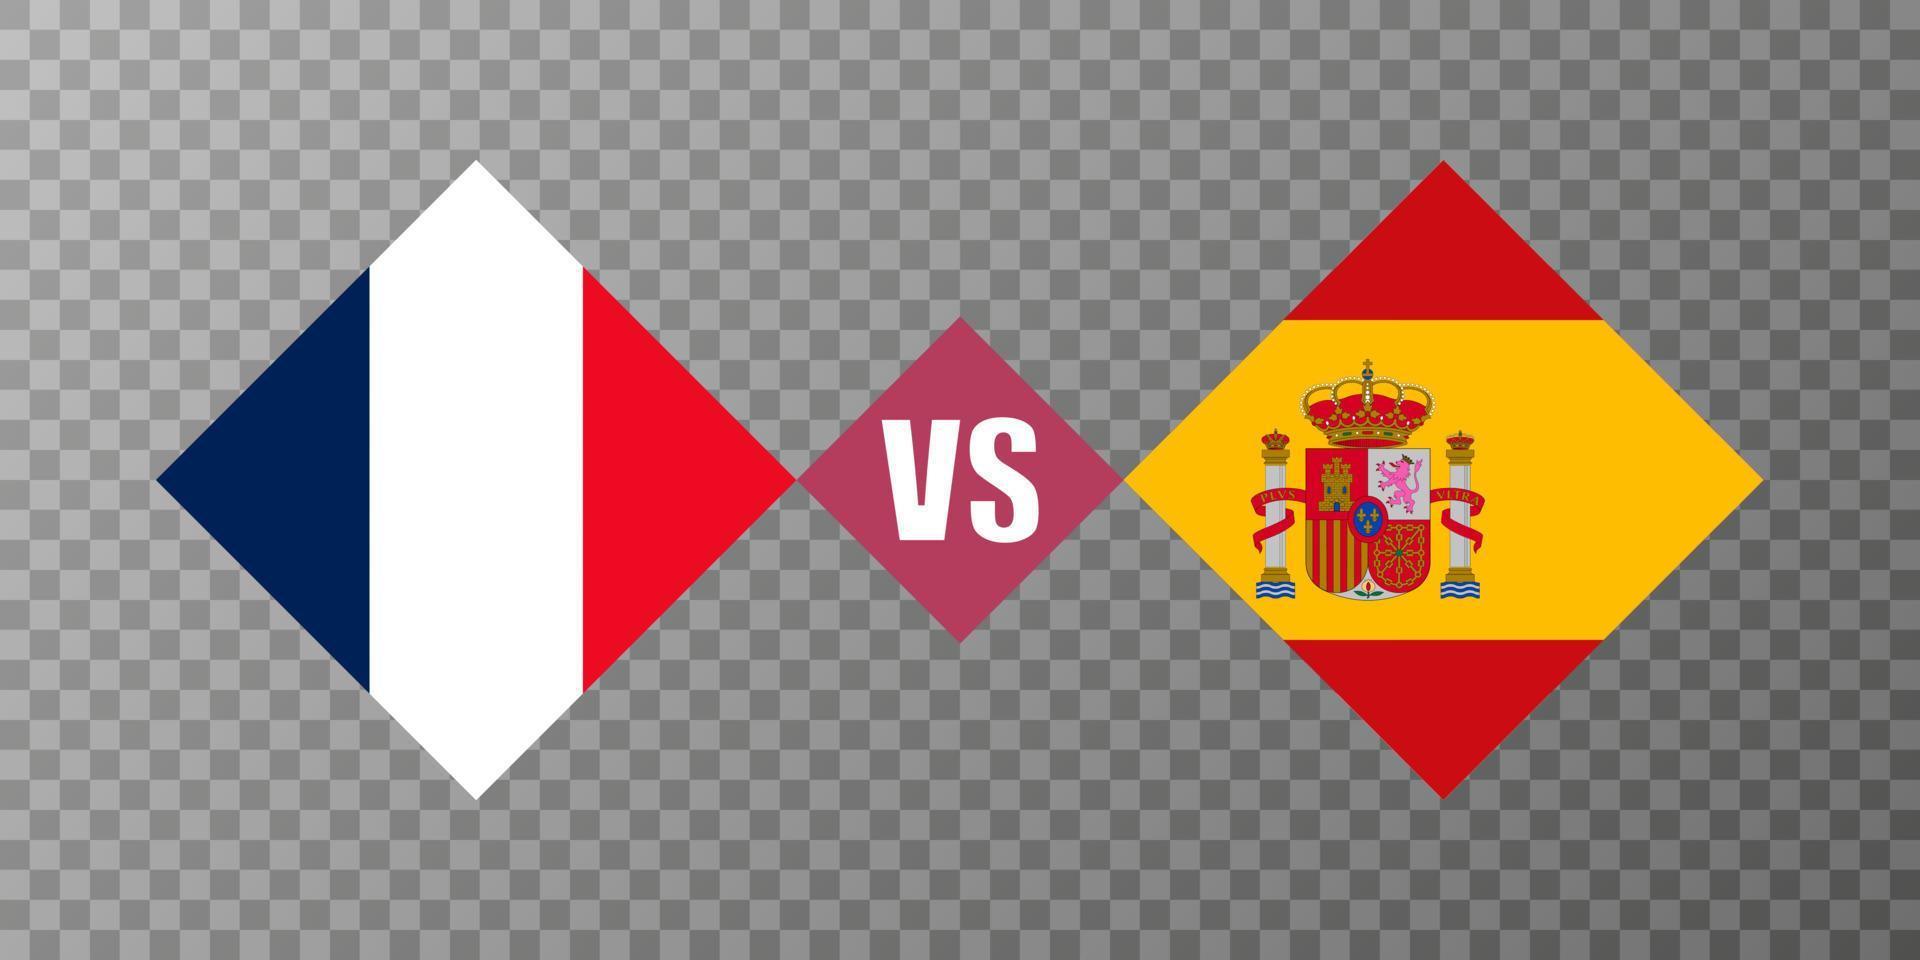 France vs Spain flag concept. Vector illustration.